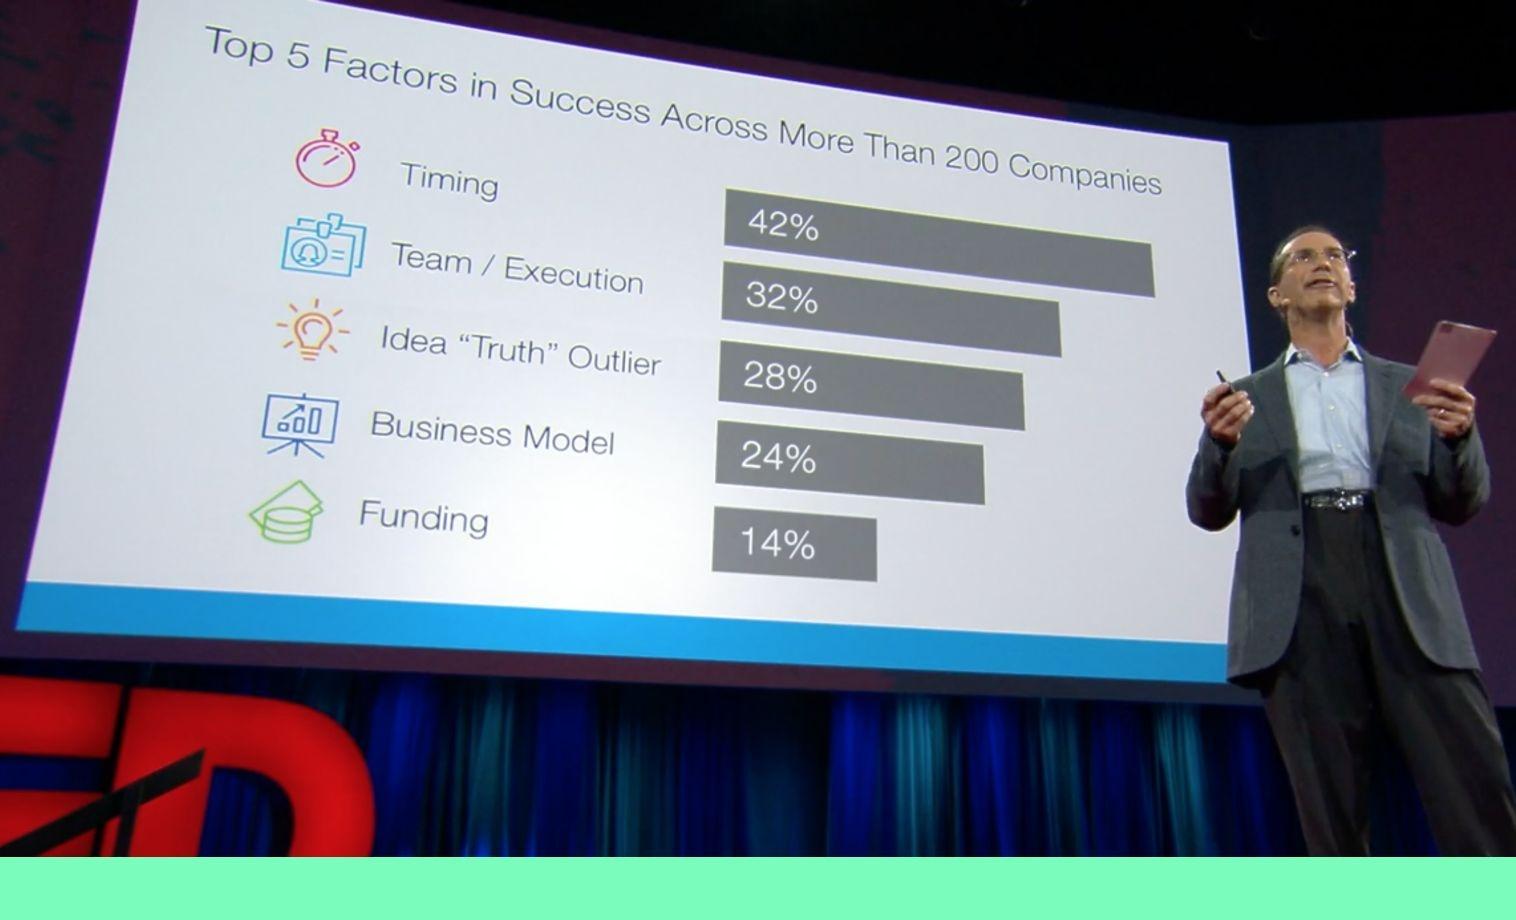 Top_5_Factors_in_Success_Across_More_than_200_companies.jpeg